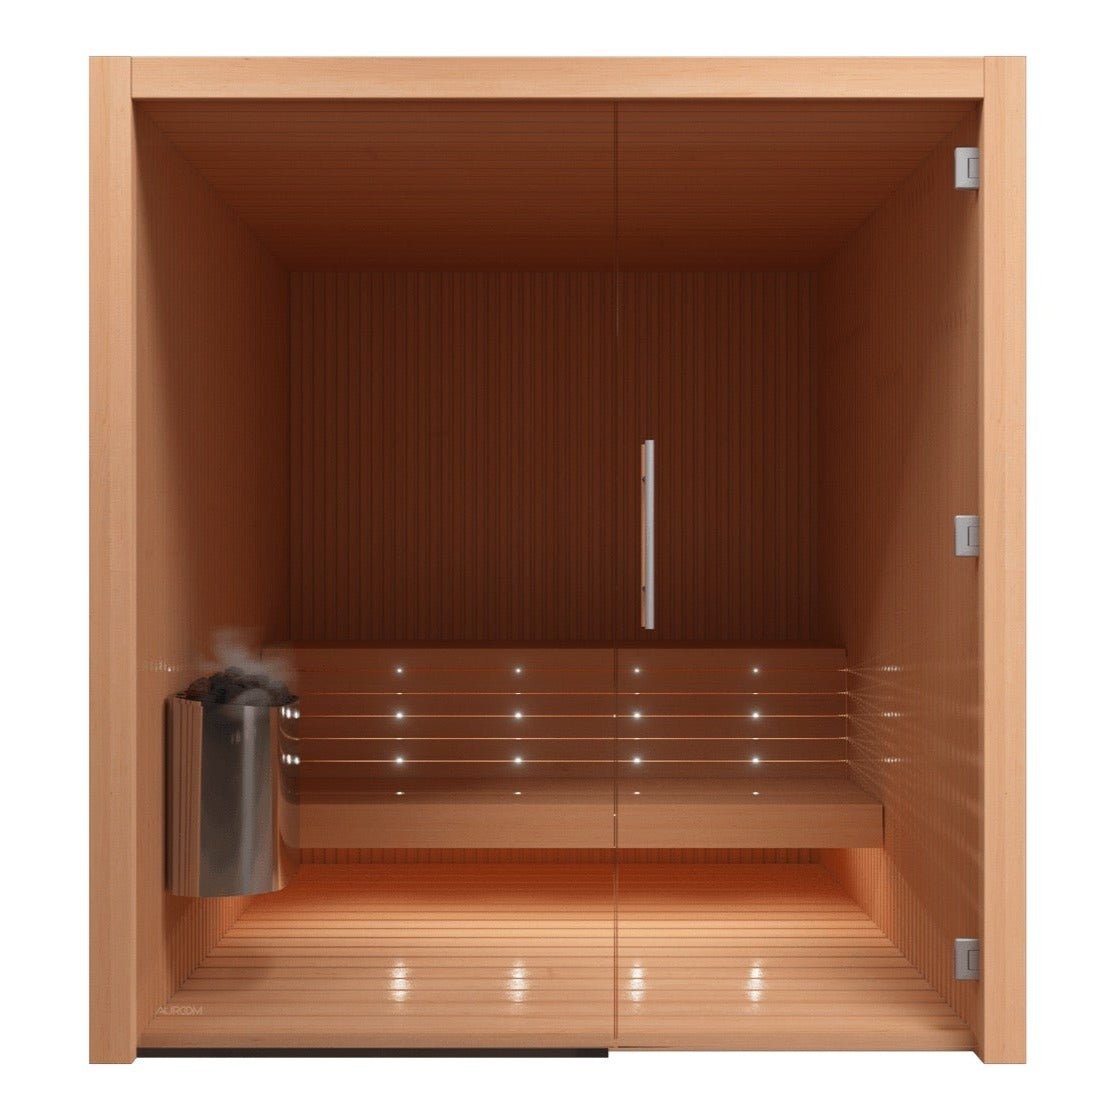 auroom-libera-glass-indoor-cabin-sauna-kit